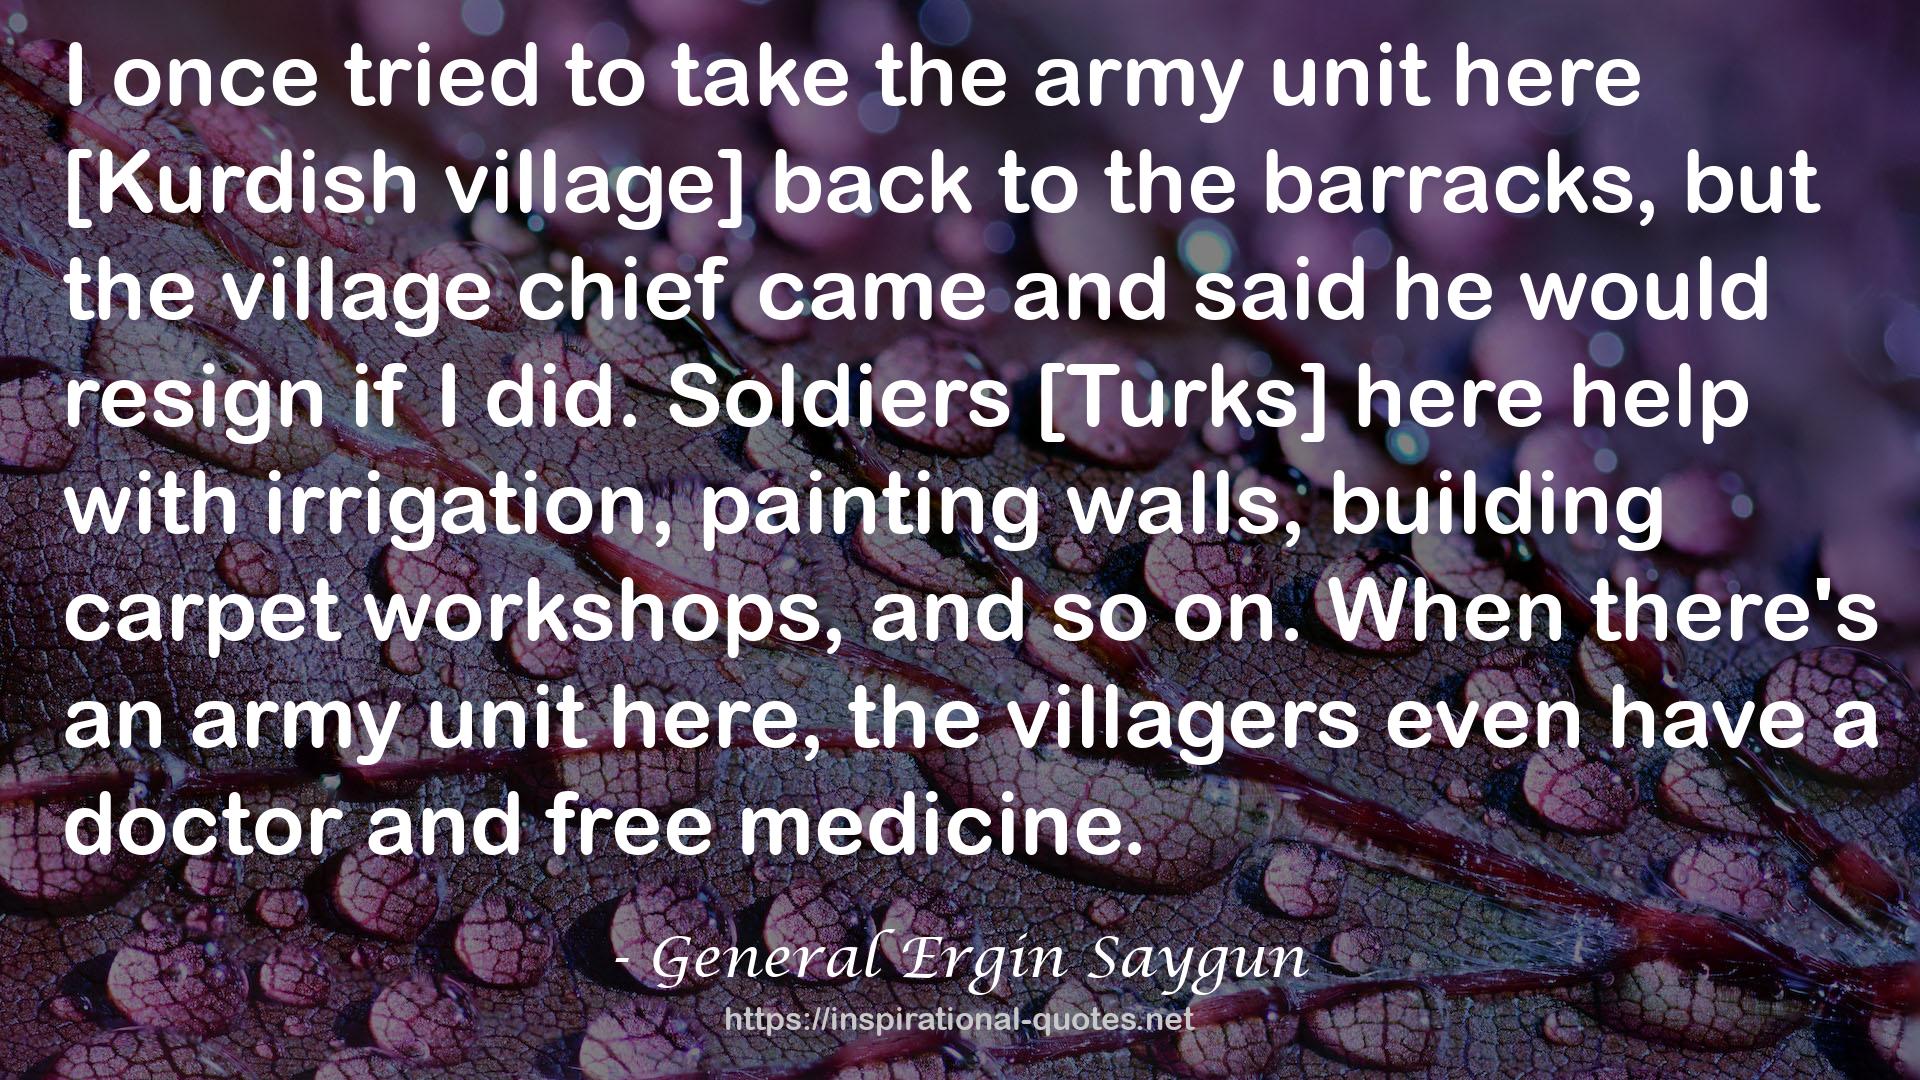 General Ergin Saygun QUOTES